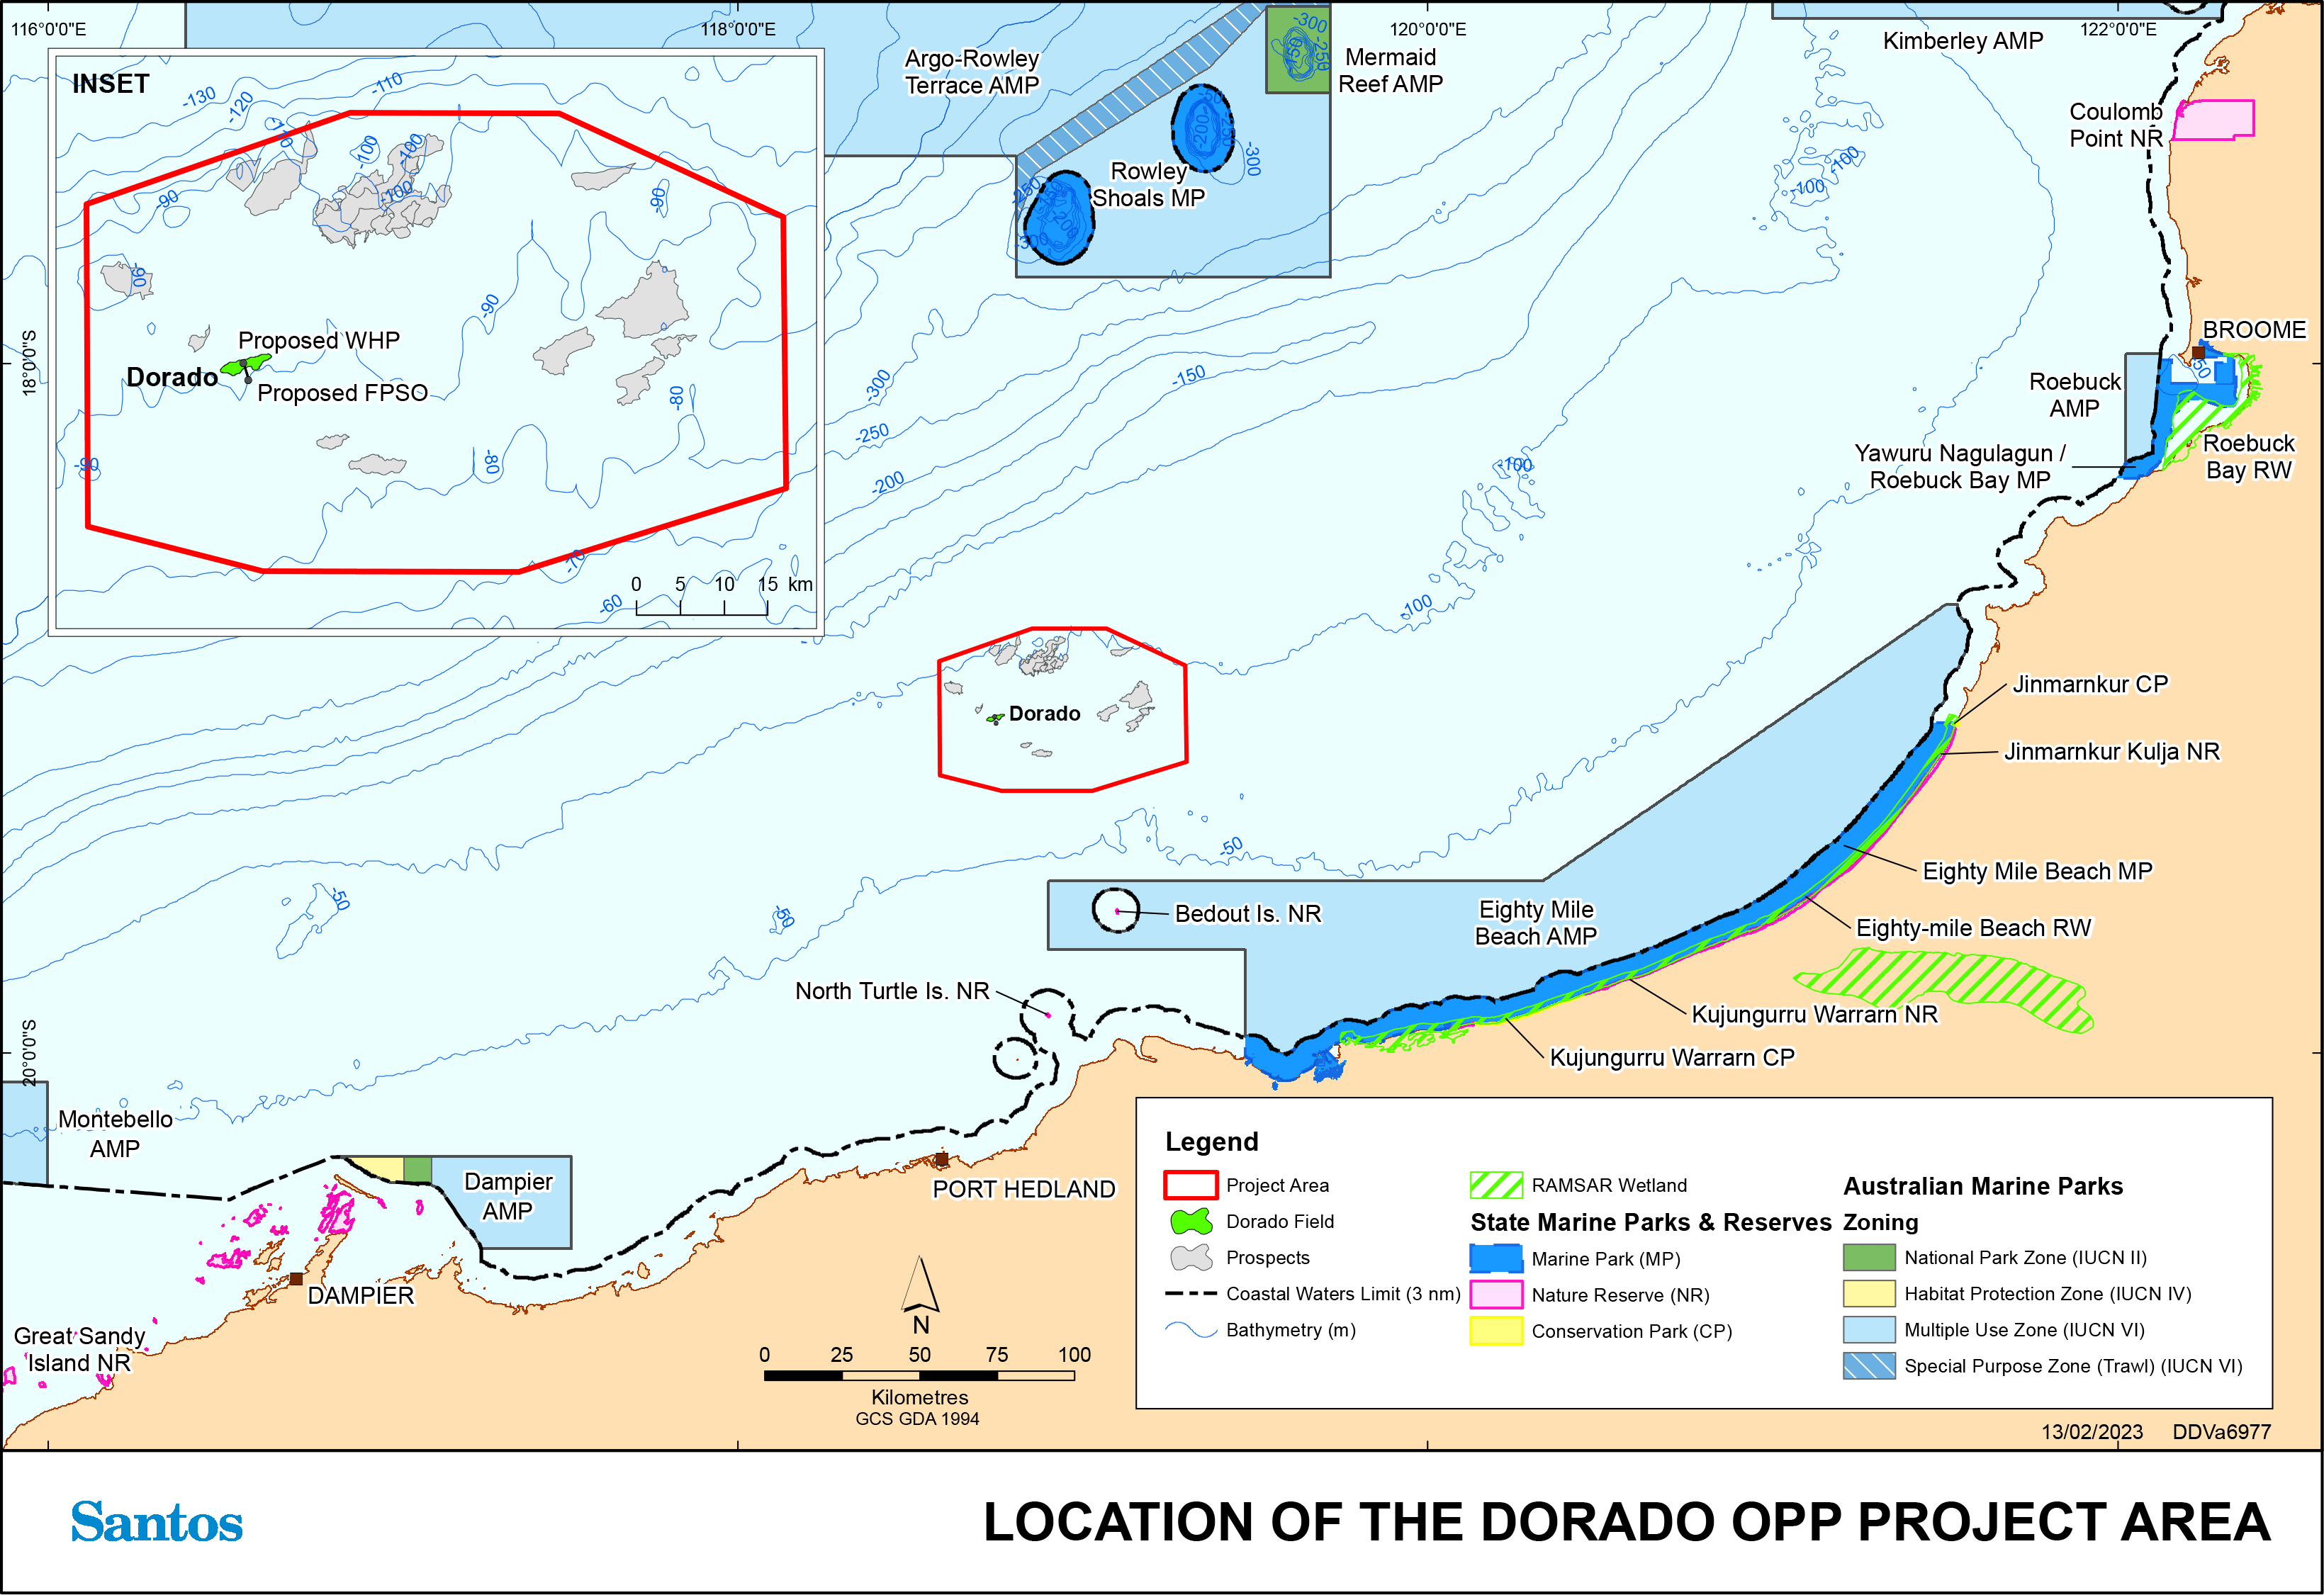 Project map - Dorado Development Offshore Project Proposal (refer to Description)